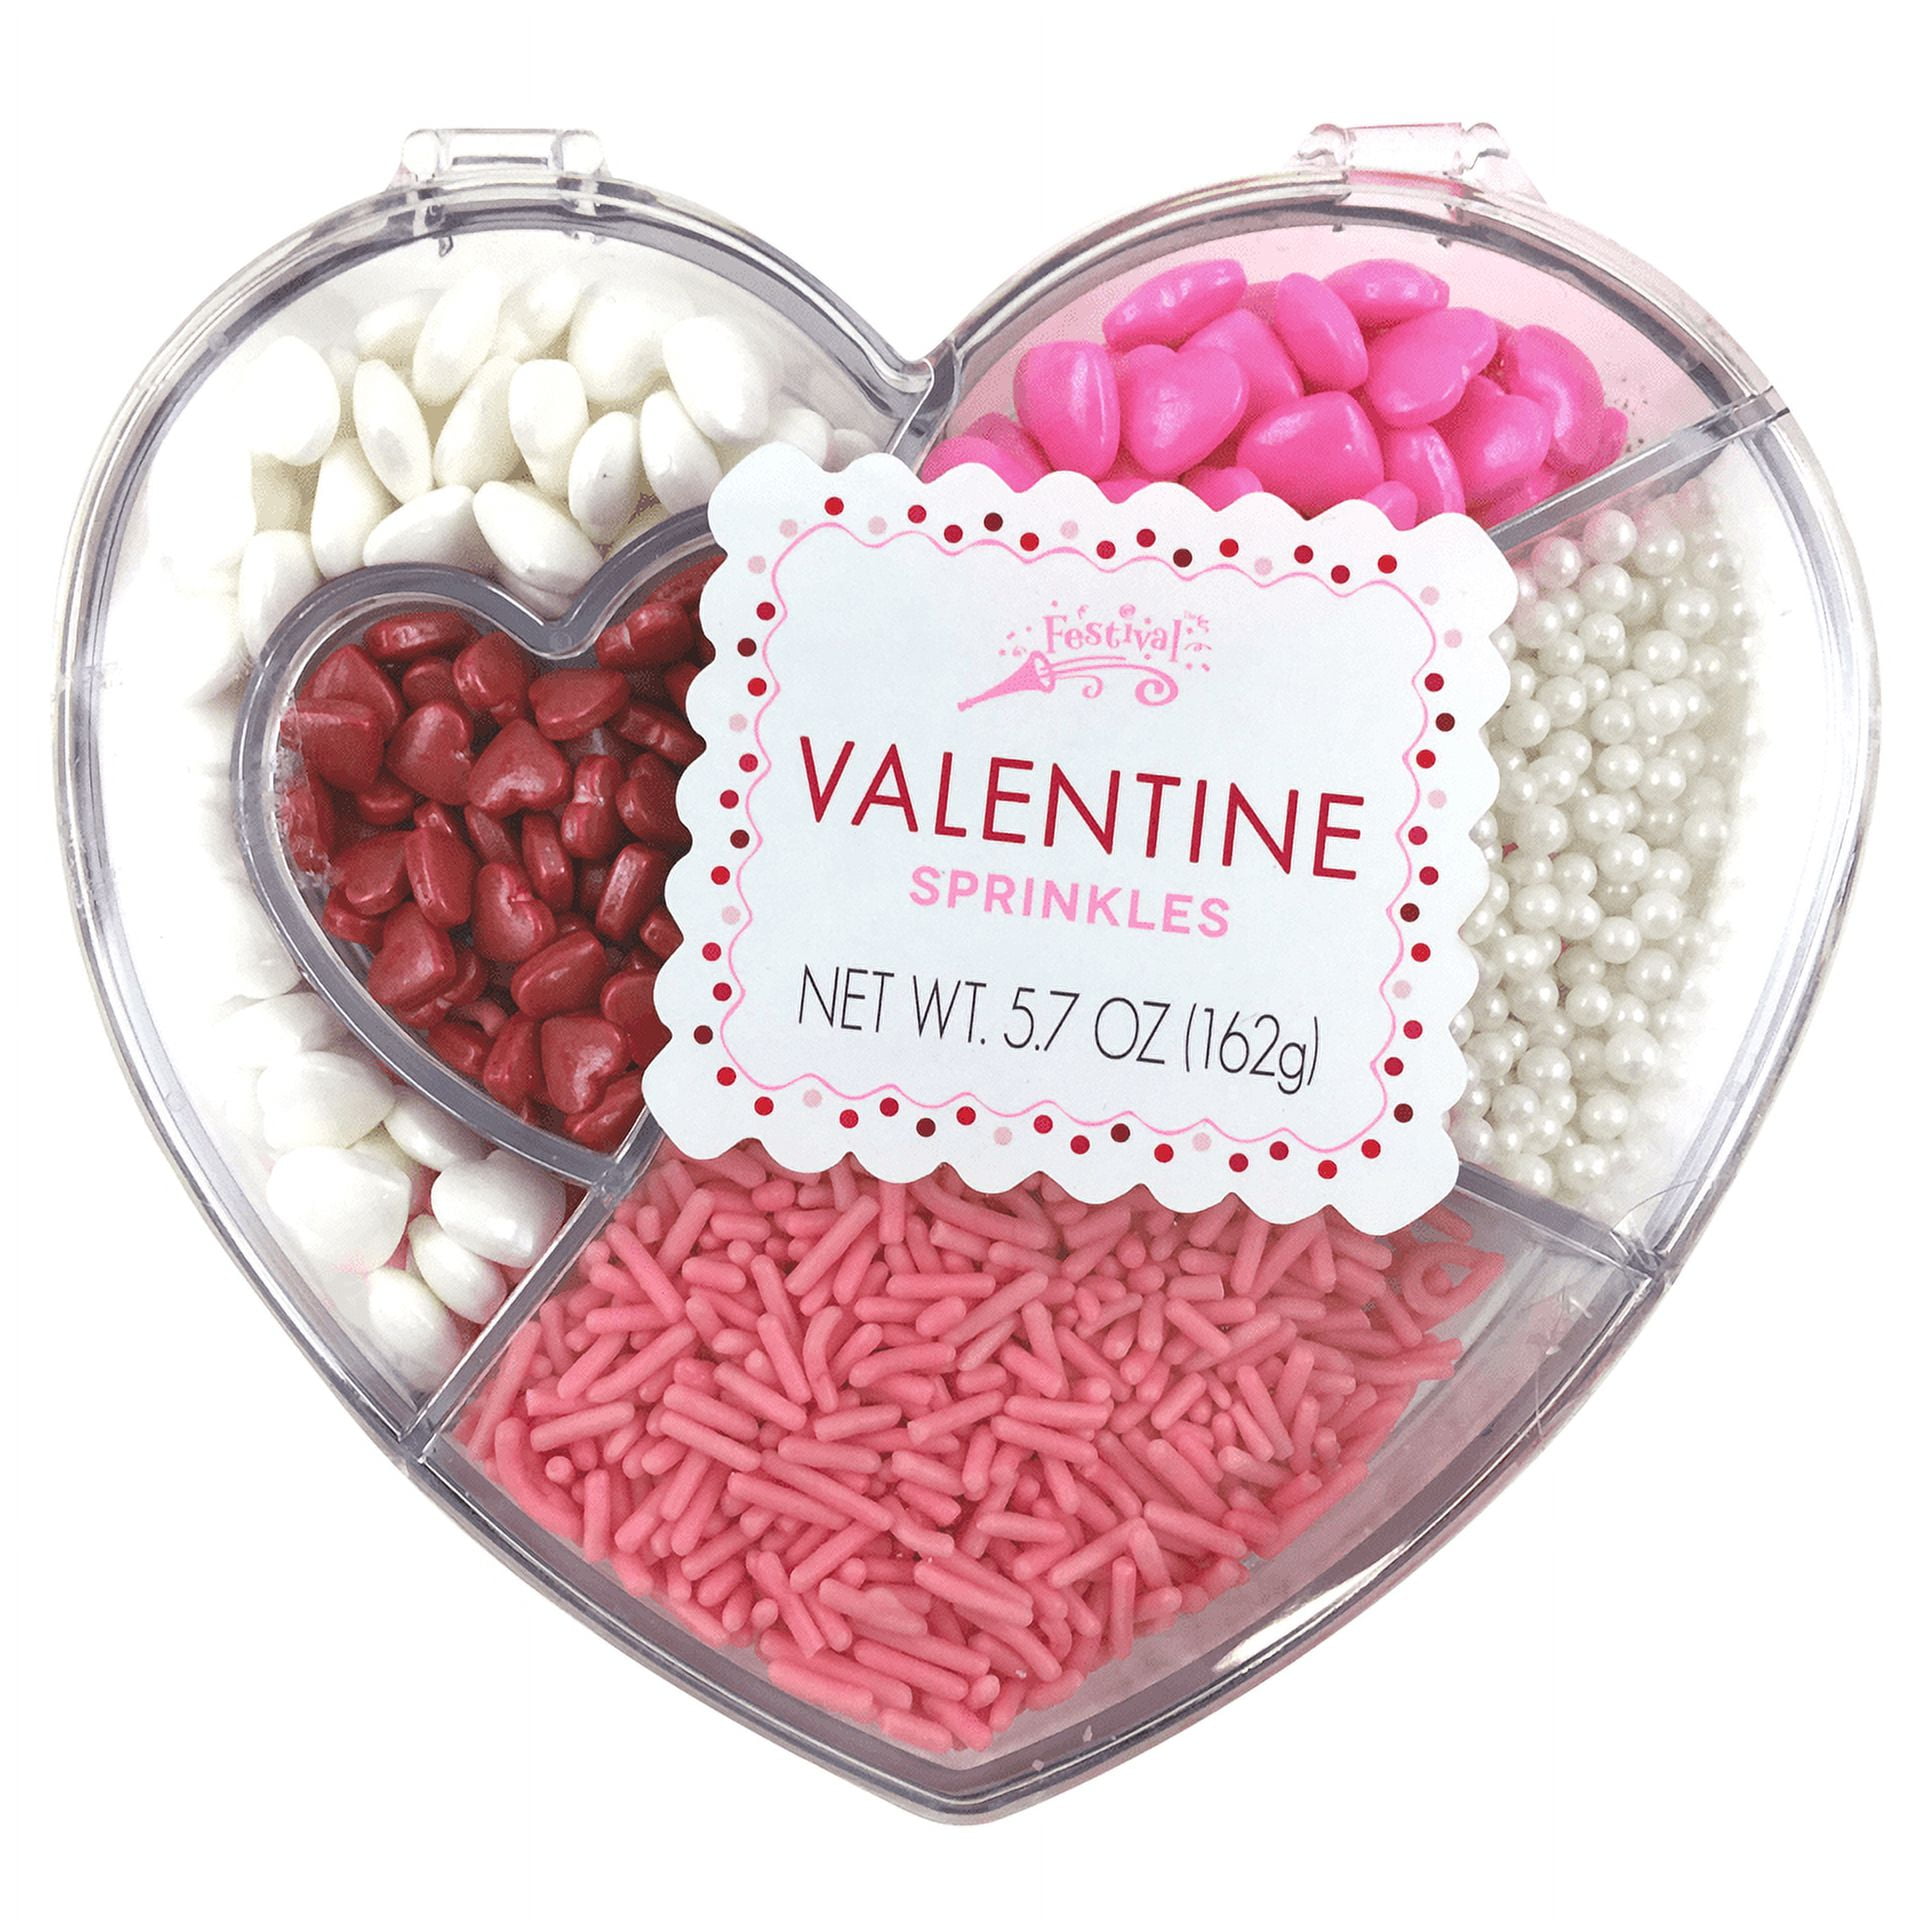 Festival Valentine Sprinkles Heart-Shaped Tackle Box, 5.7 oz 